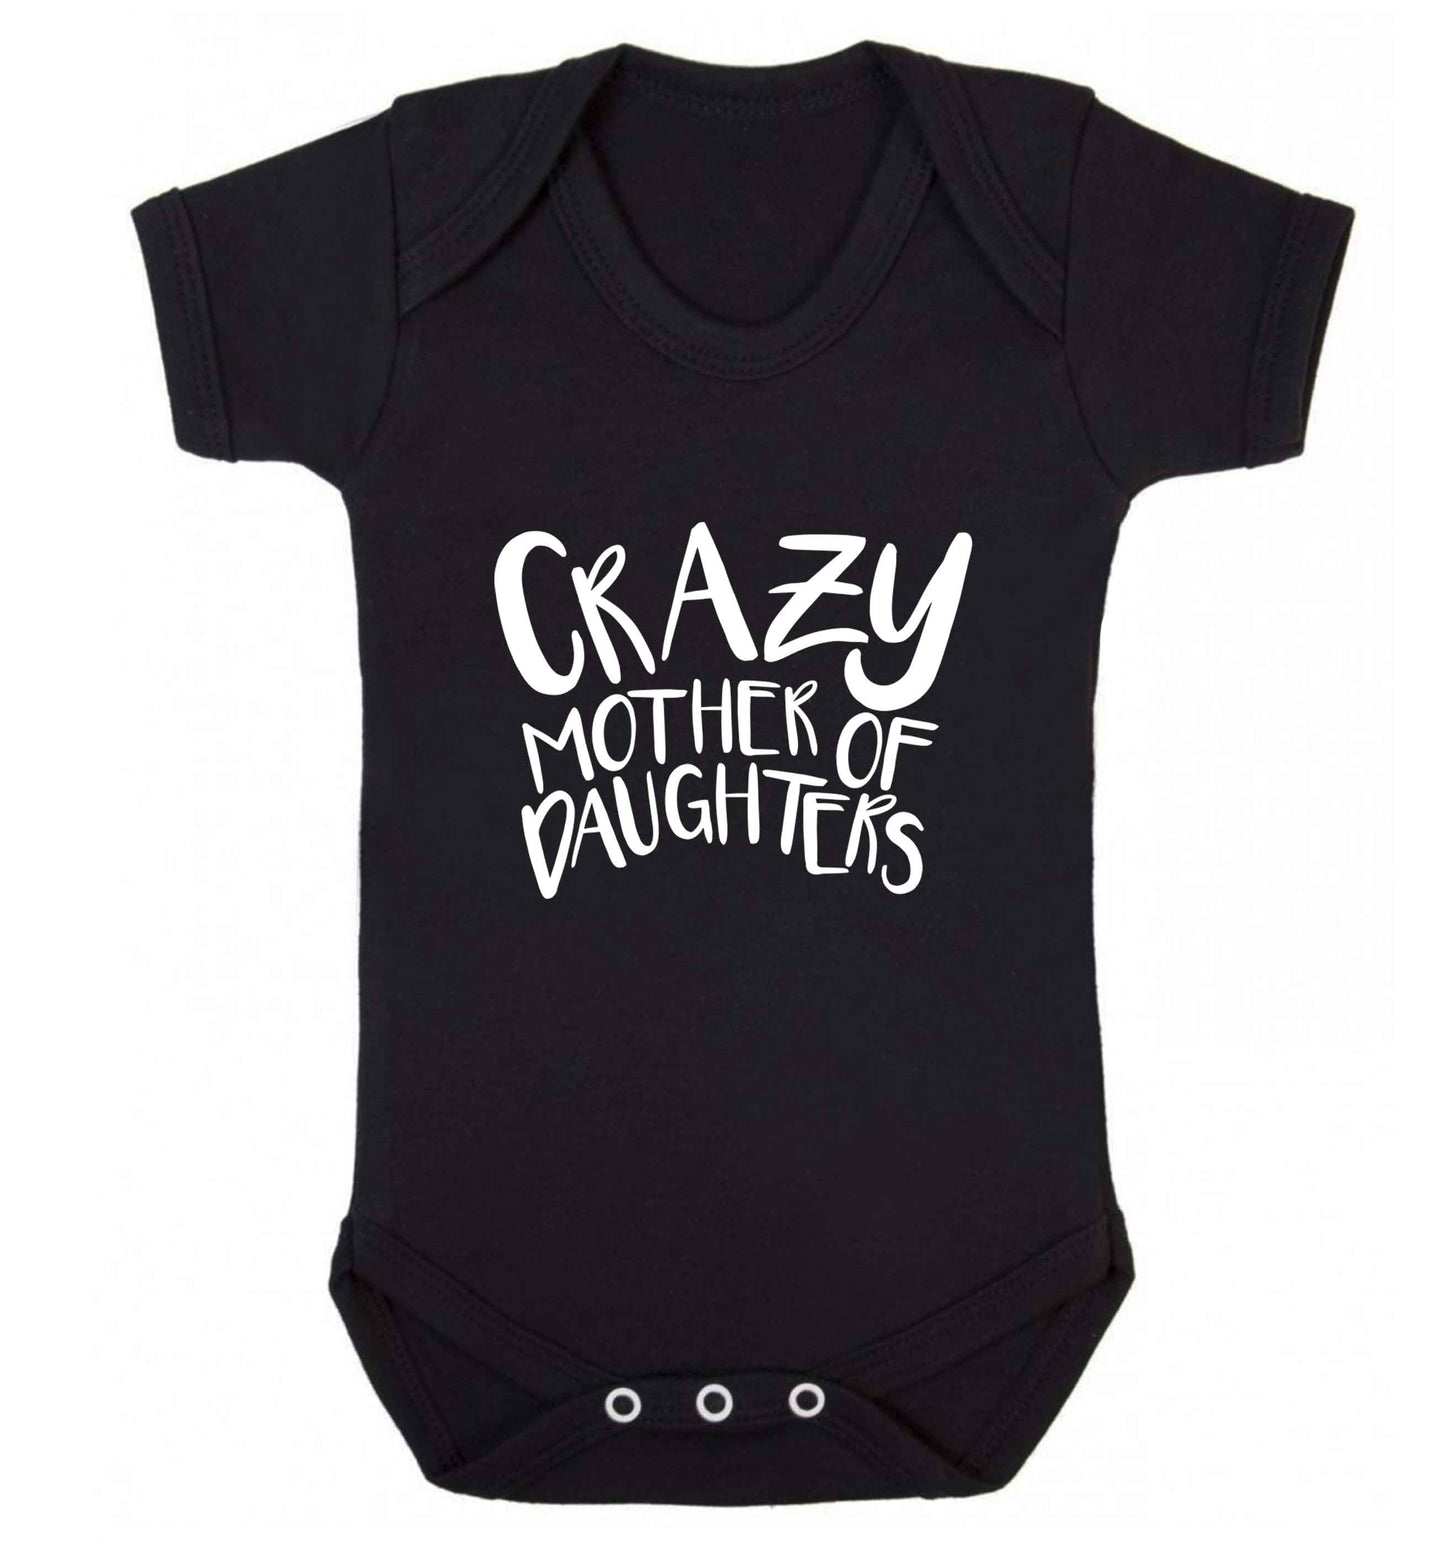 Crazy mother of daughters baby vest black 18-24 months